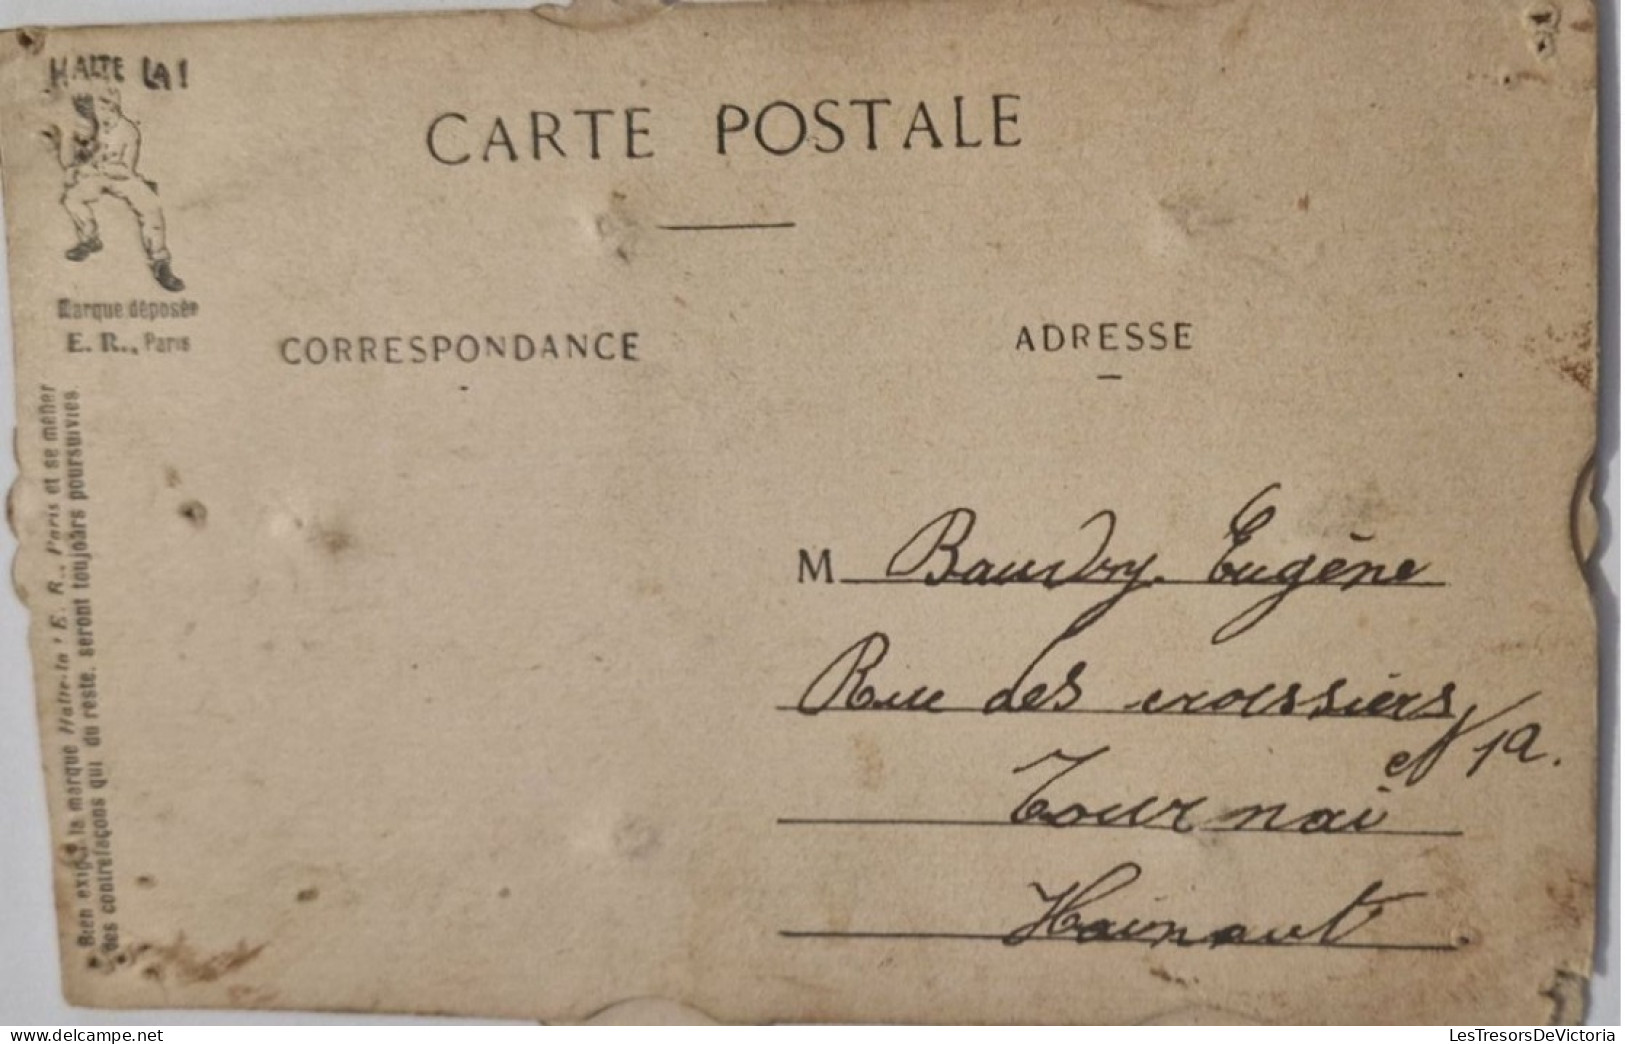 FANTAISIES - CARTE SYSTEMES - Militaire - Calendrier De La Classe - Carte Postale Ancienne - Cartoline Con Meccanismi